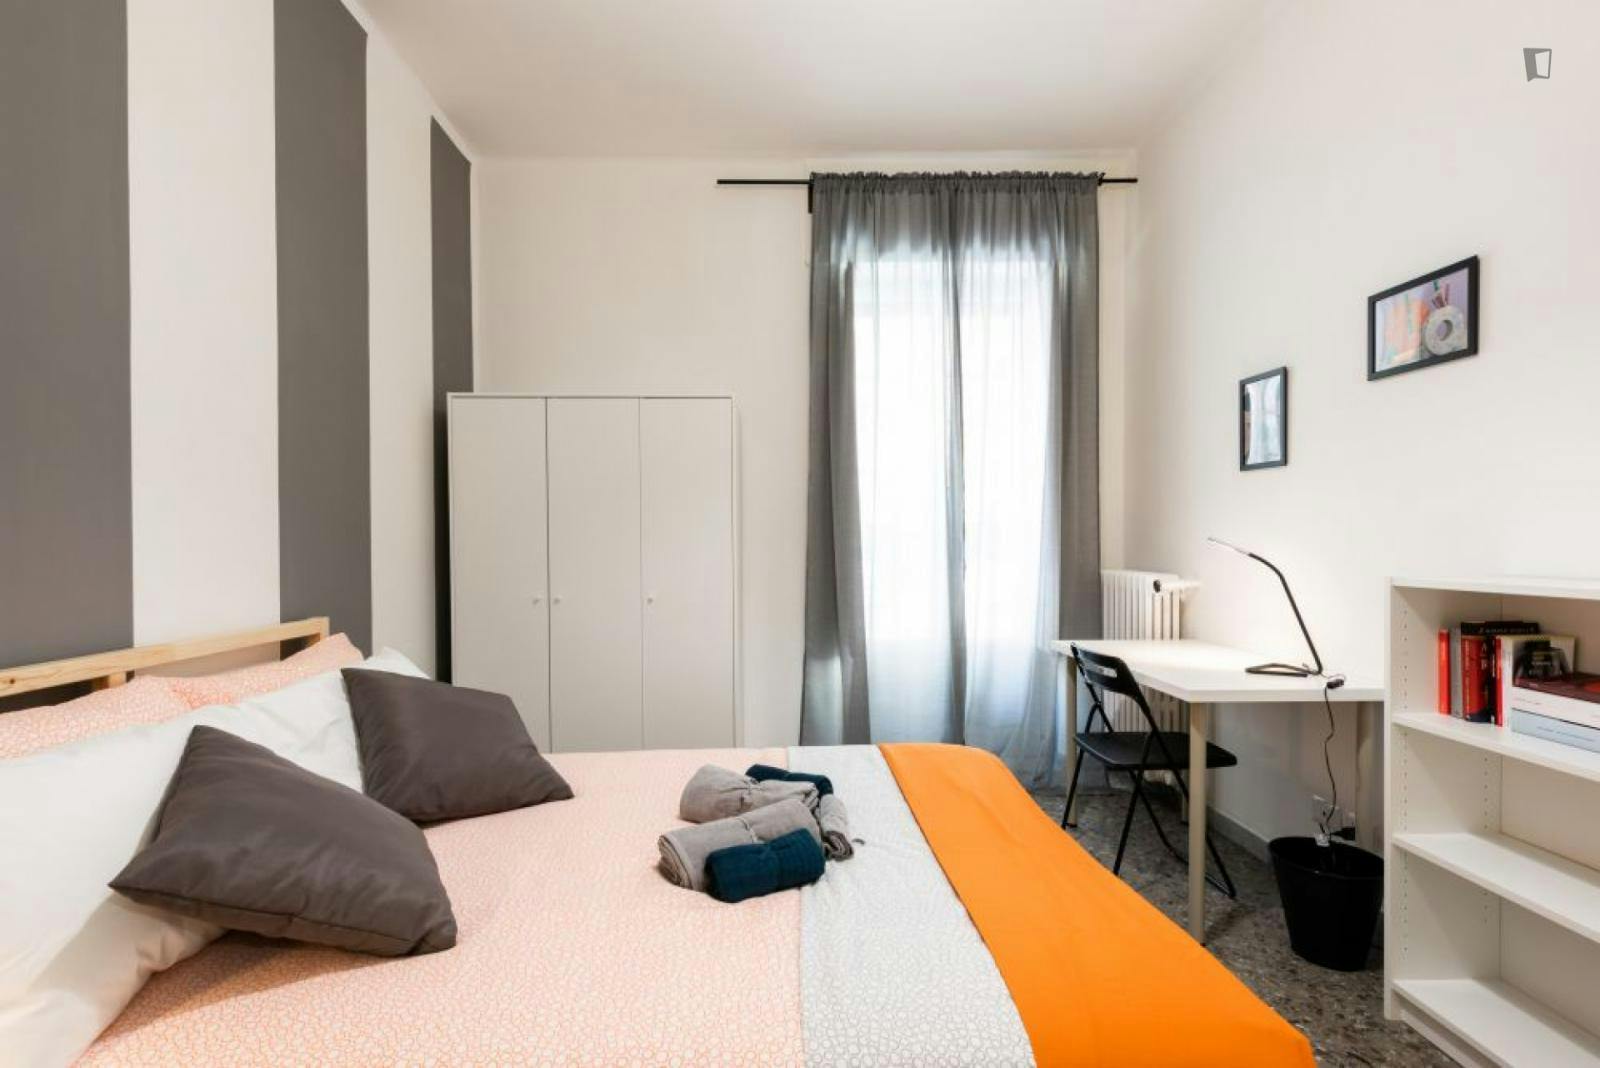 Beautiful double bedroom in a 4-bedroom apartment near Bari F. Crispi metro station